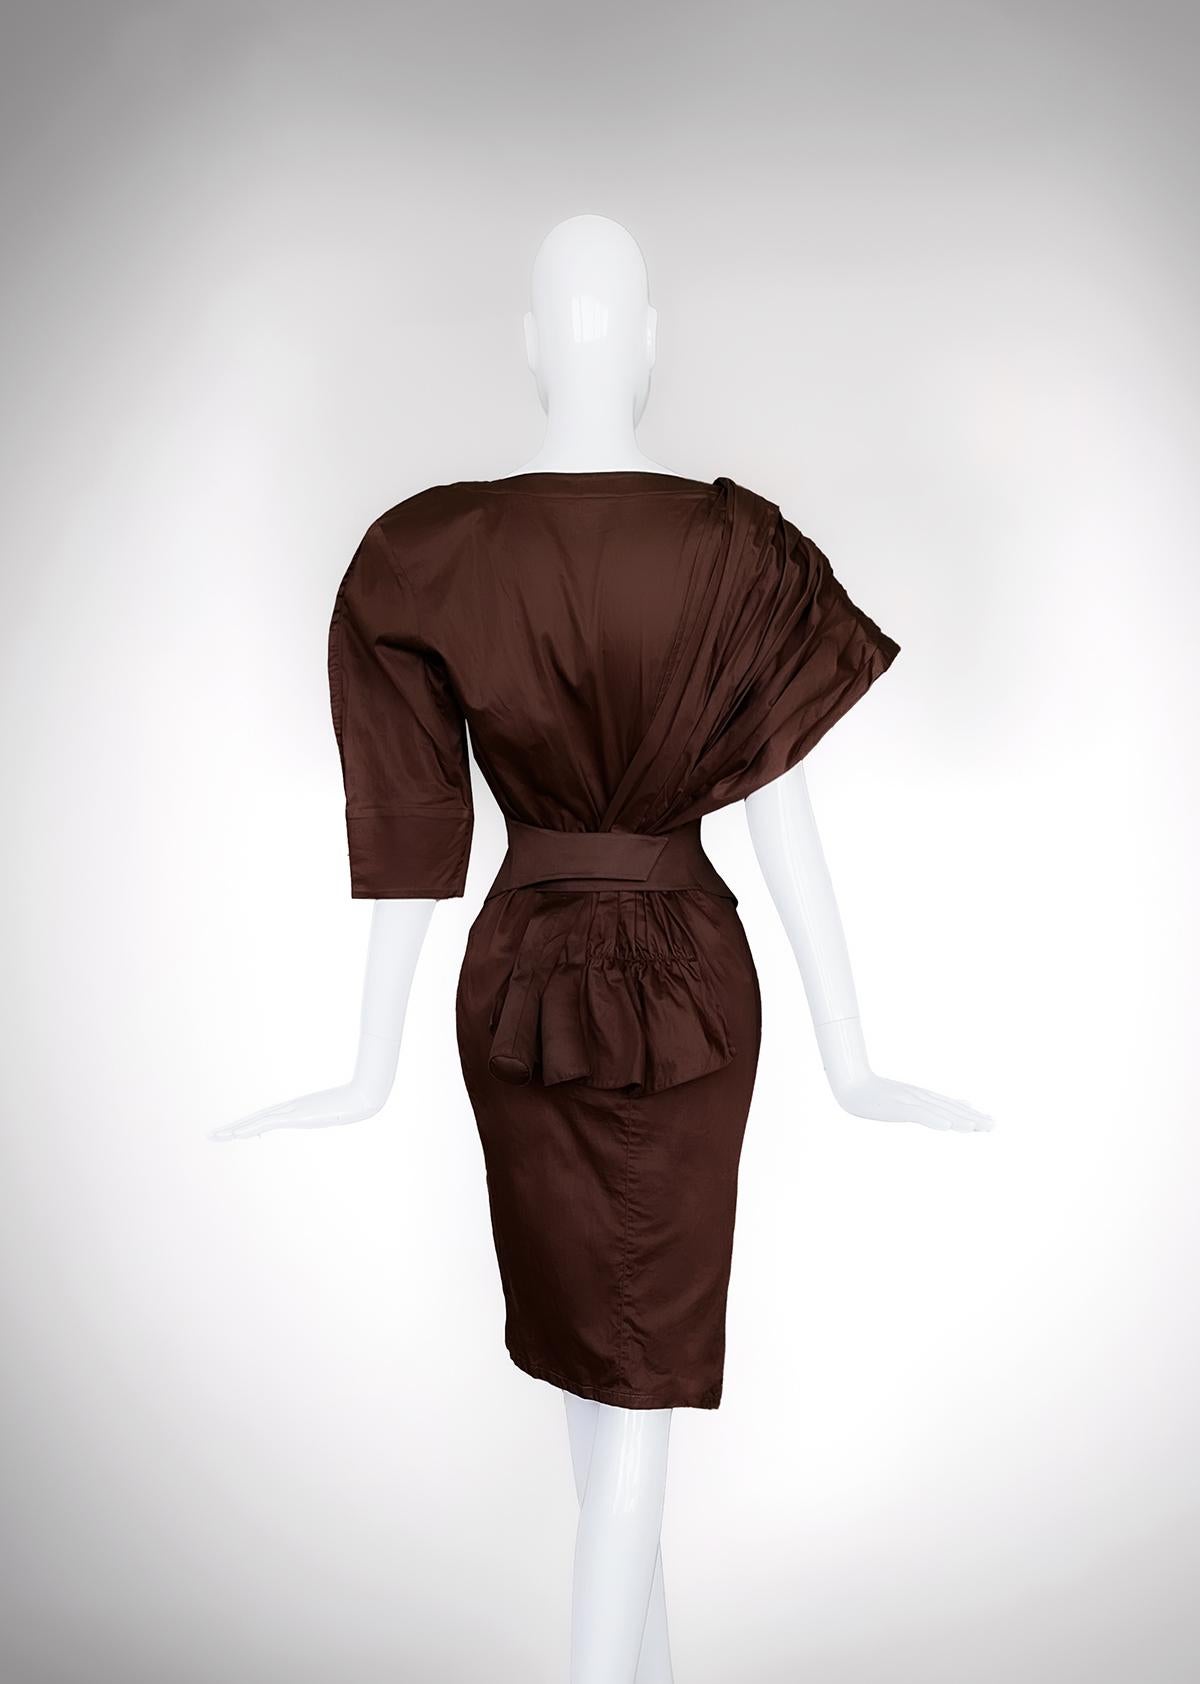 Thierry Mugler Goddess Dress Archival SS 1988 Sculptural Gown  For Sale 5